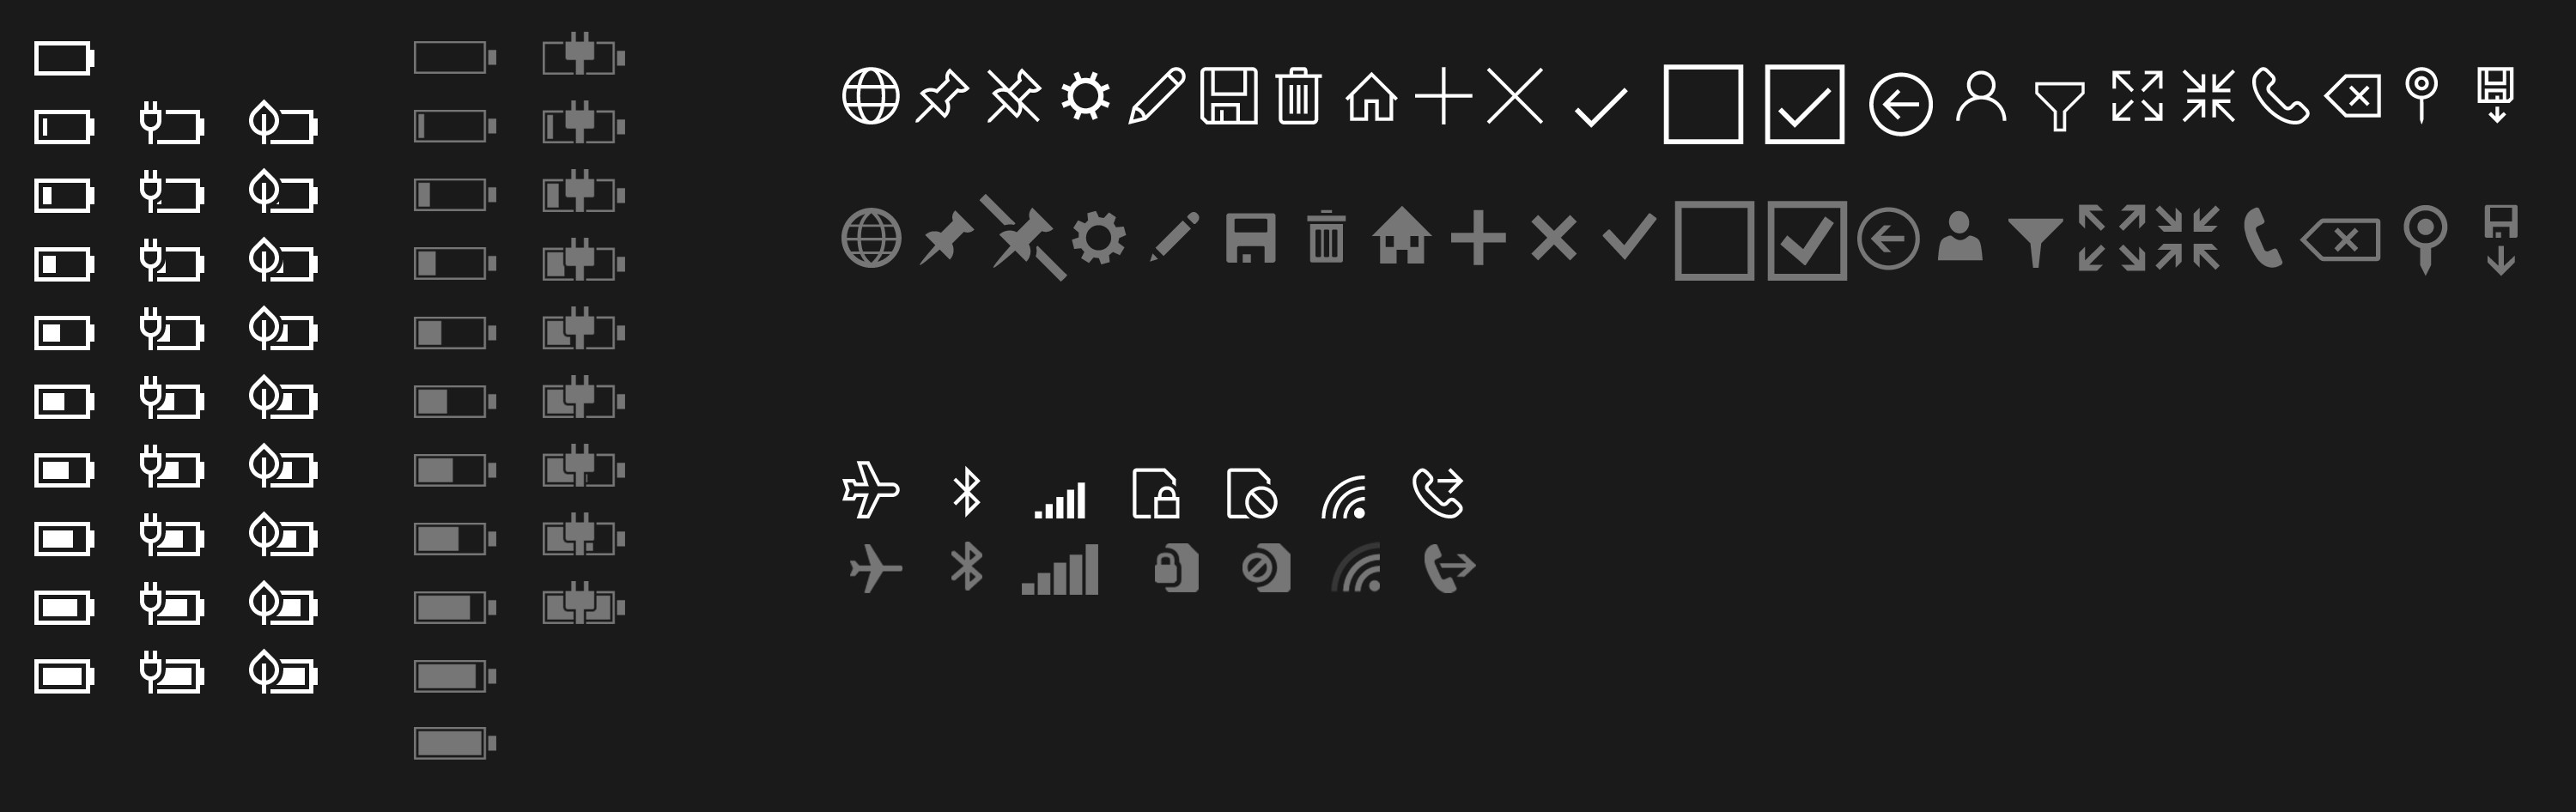 Windows-10-Icons